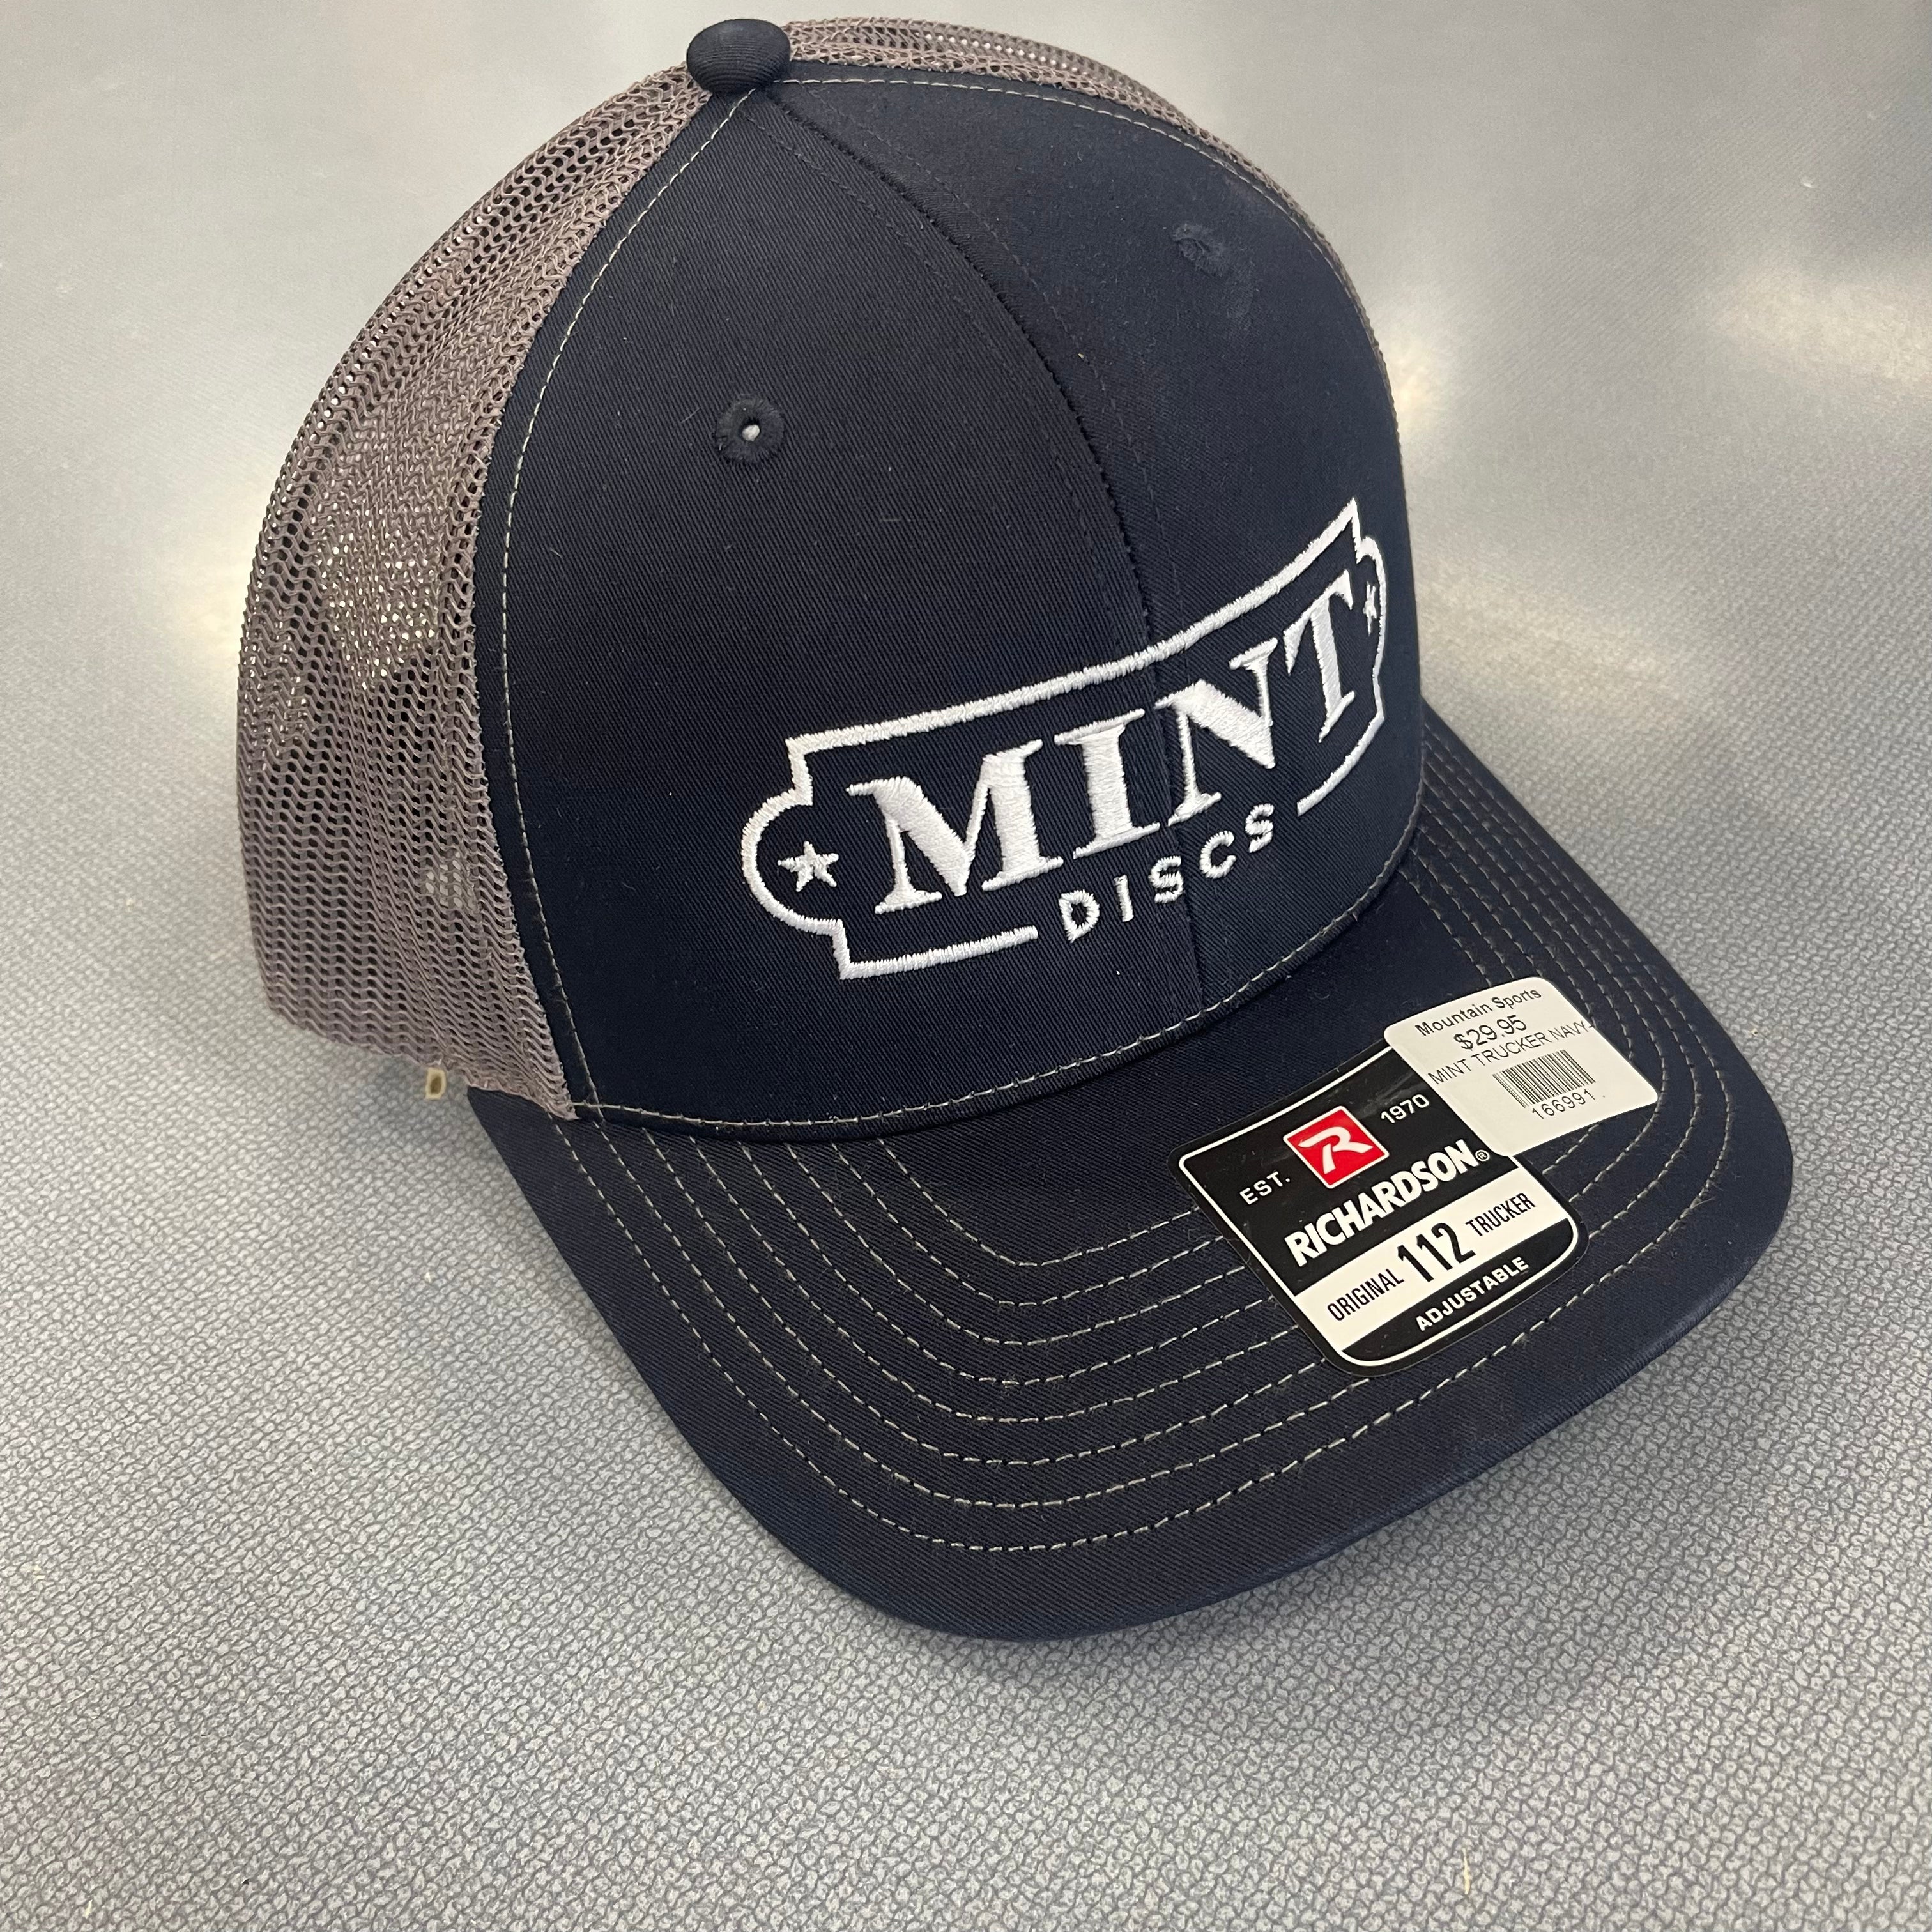 Mint Discs Trucker Hat